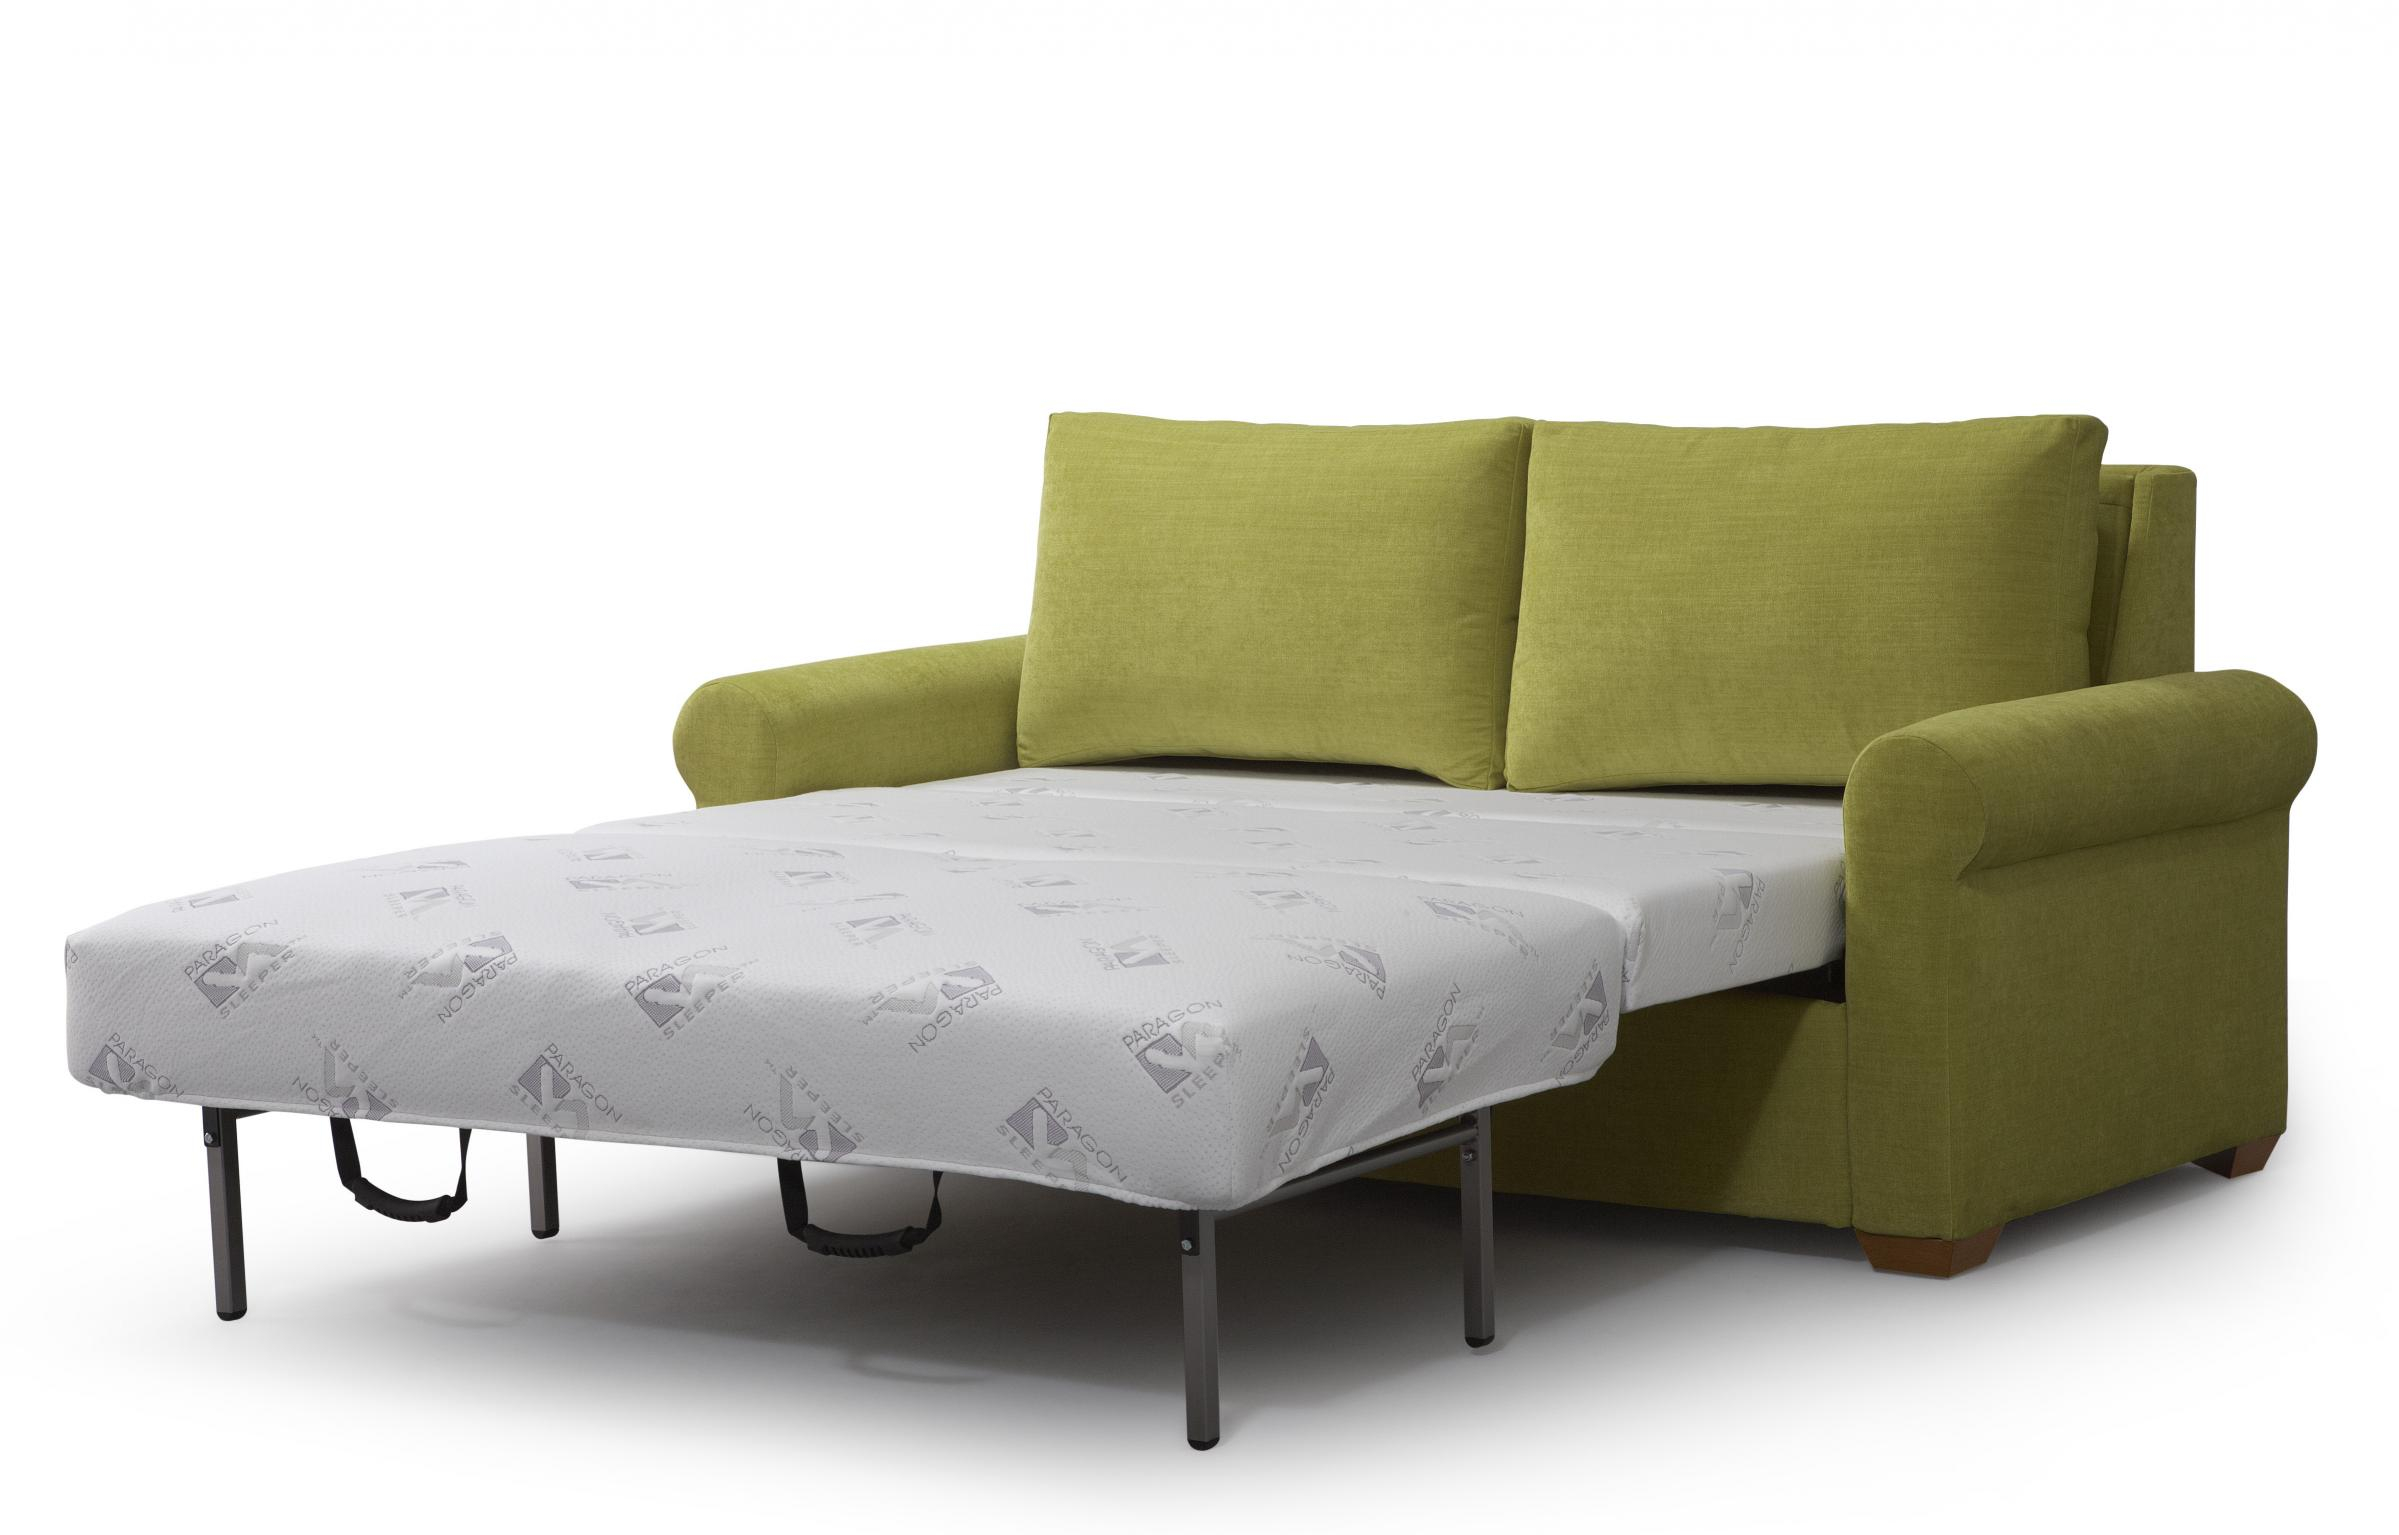 tempurpedic mattress for sleeper sofa